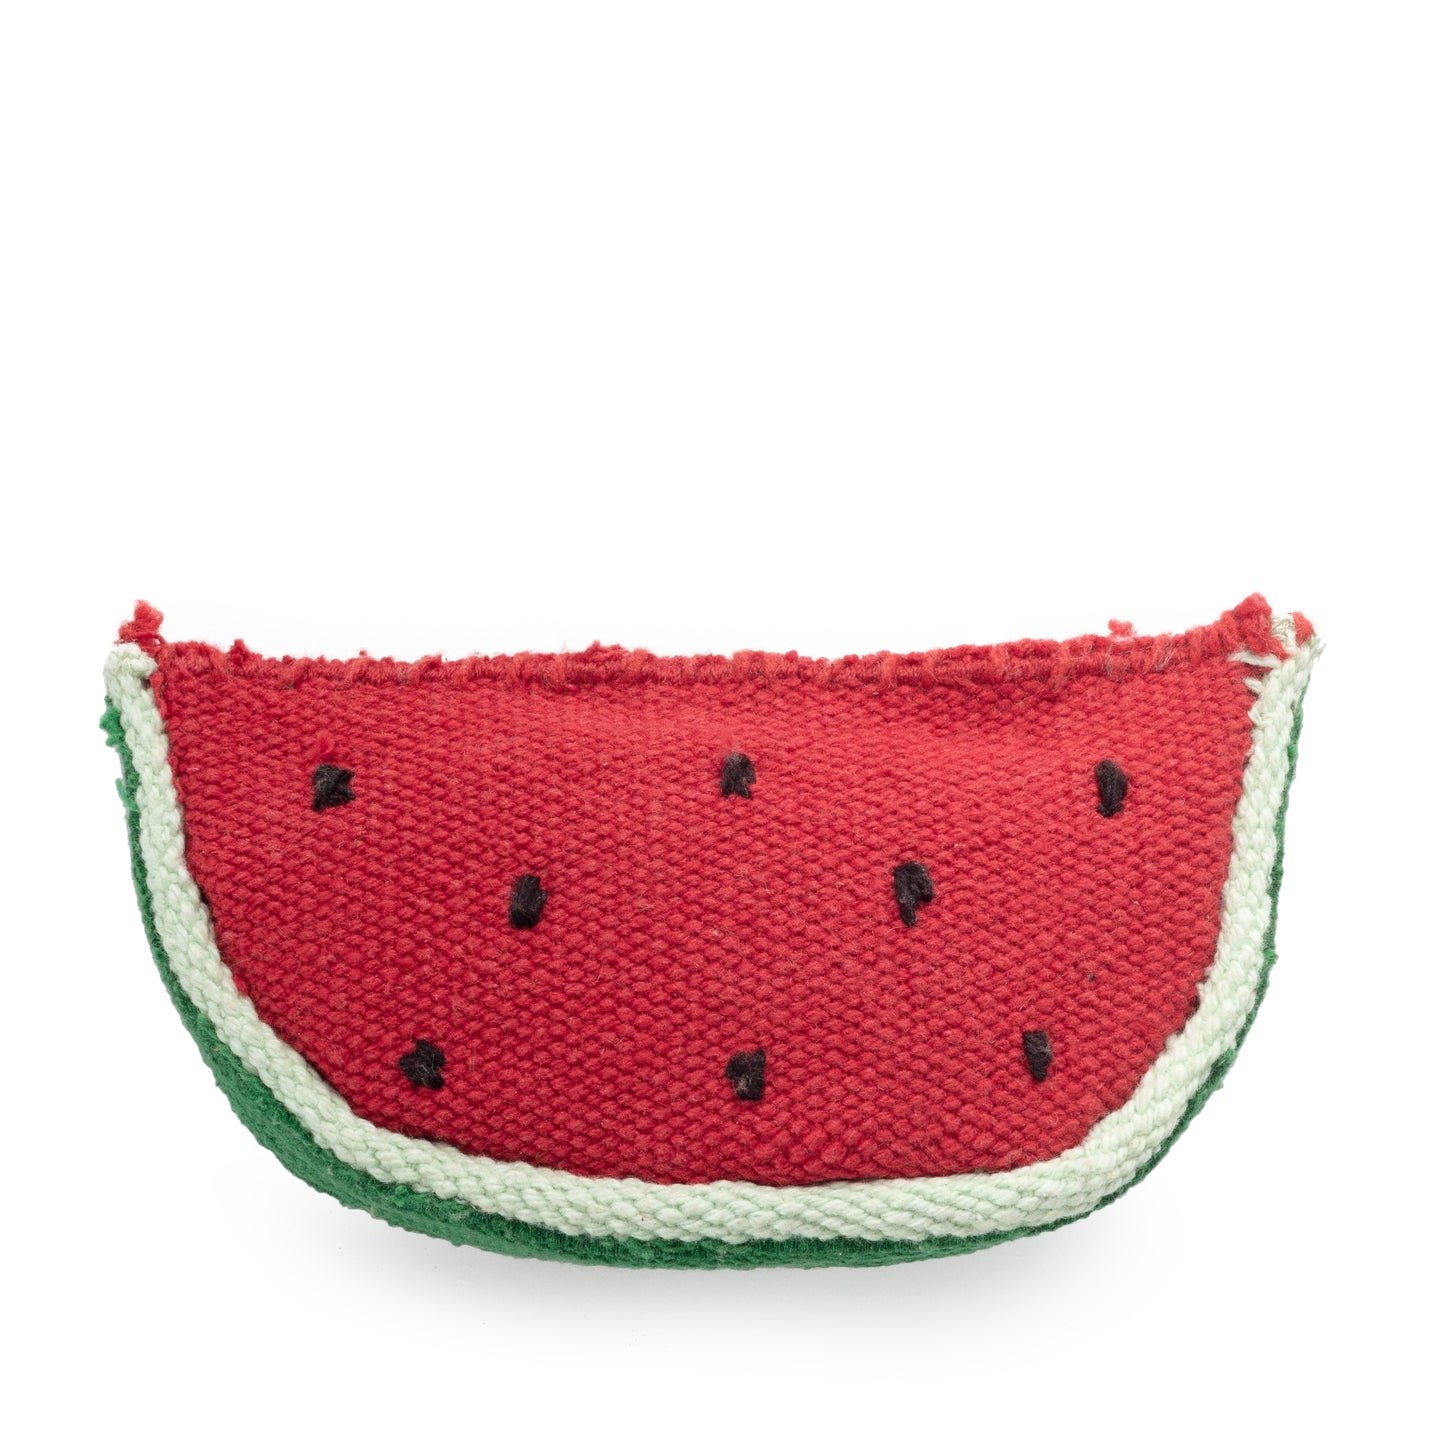 DIY Wally The Watermelon